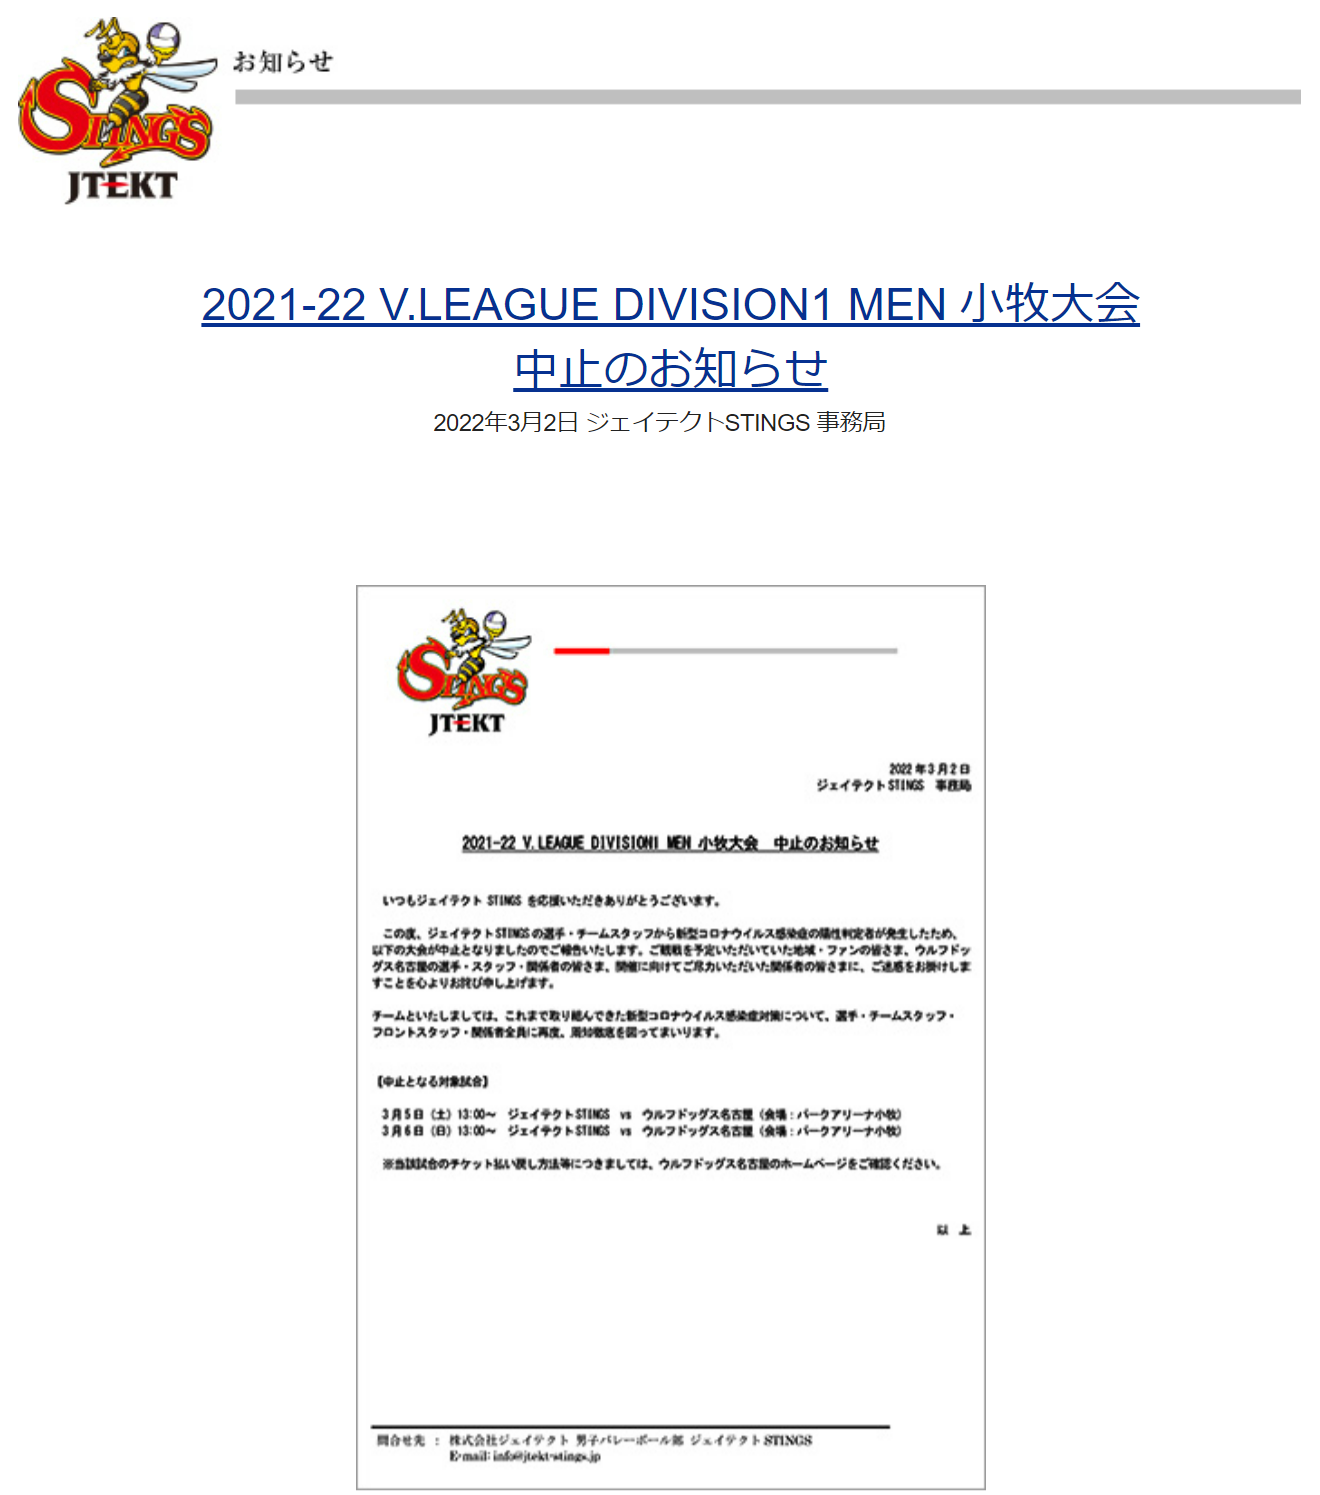 2021-22 V.LEAGUE DIVISION1 MEN 小牧大会 中止のお知らせ